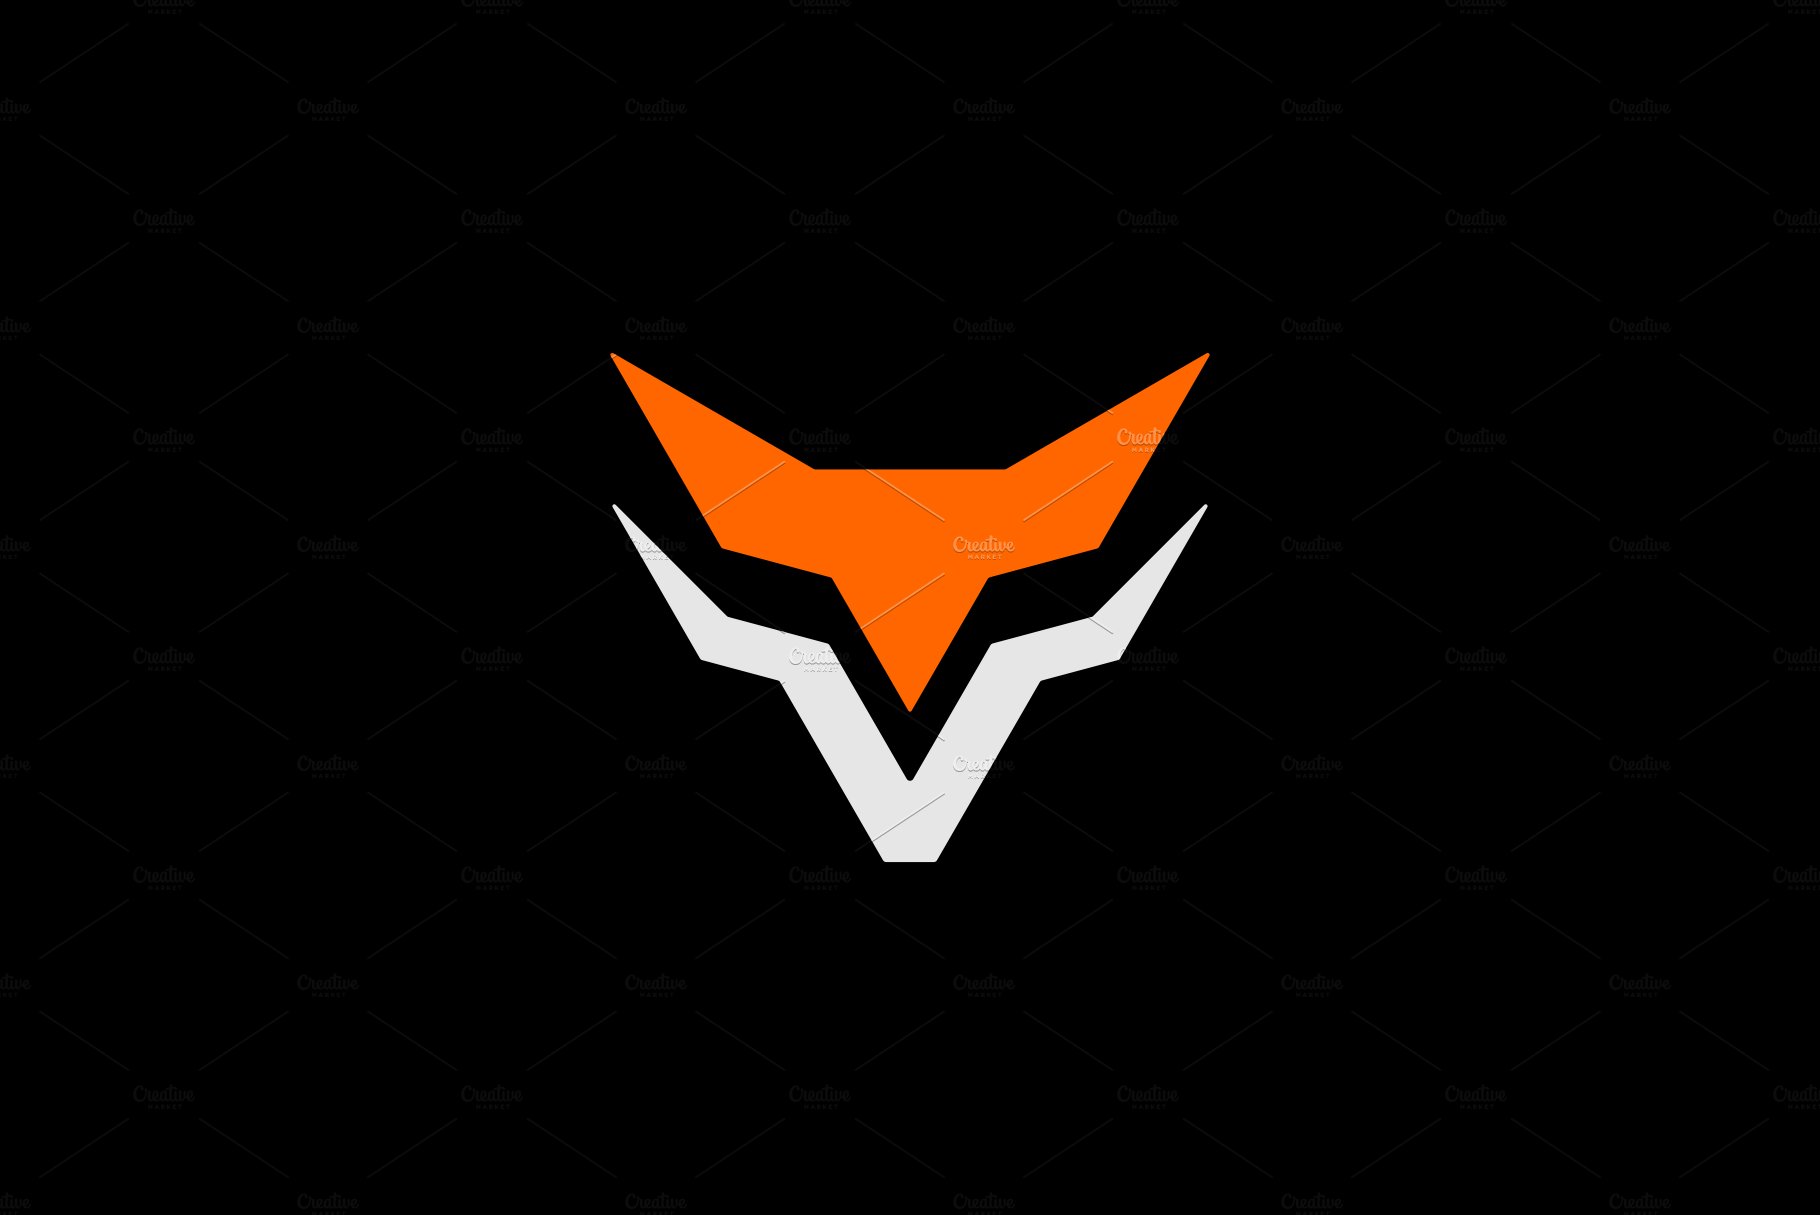 Modern Fox Head Logo cover image.